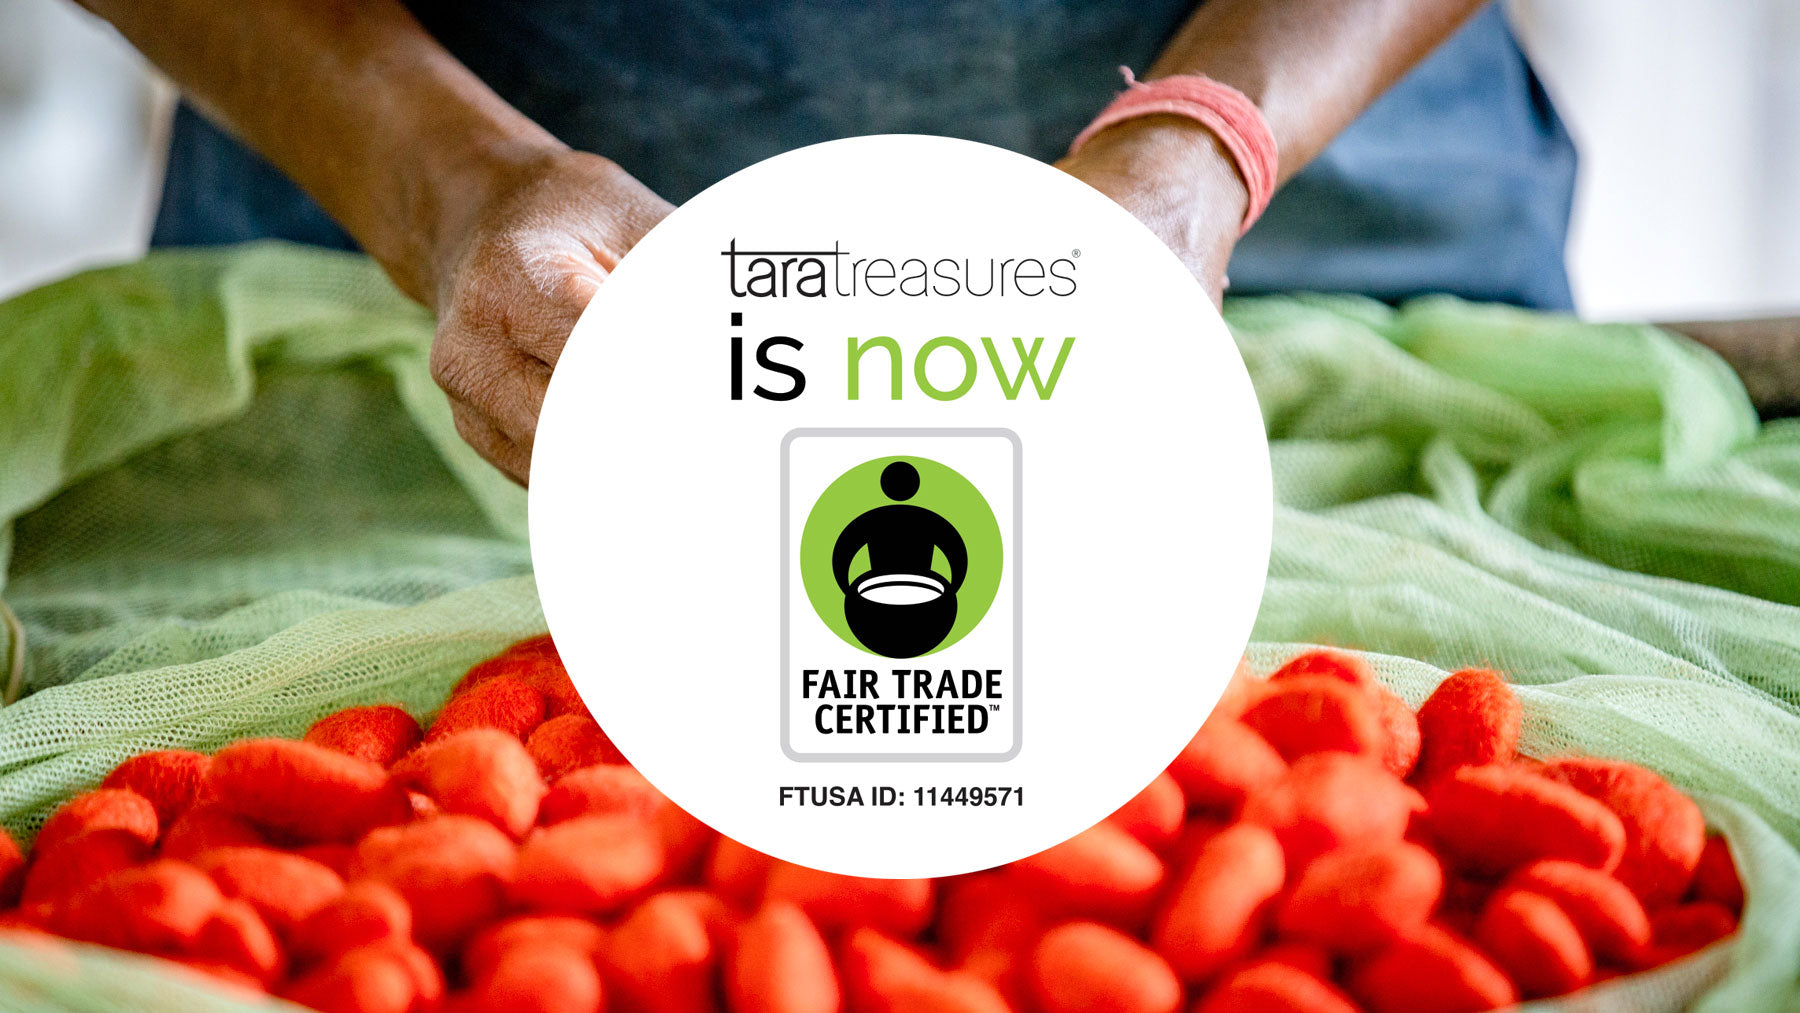 Tara Treasures is now Fair Trade Certified Brand